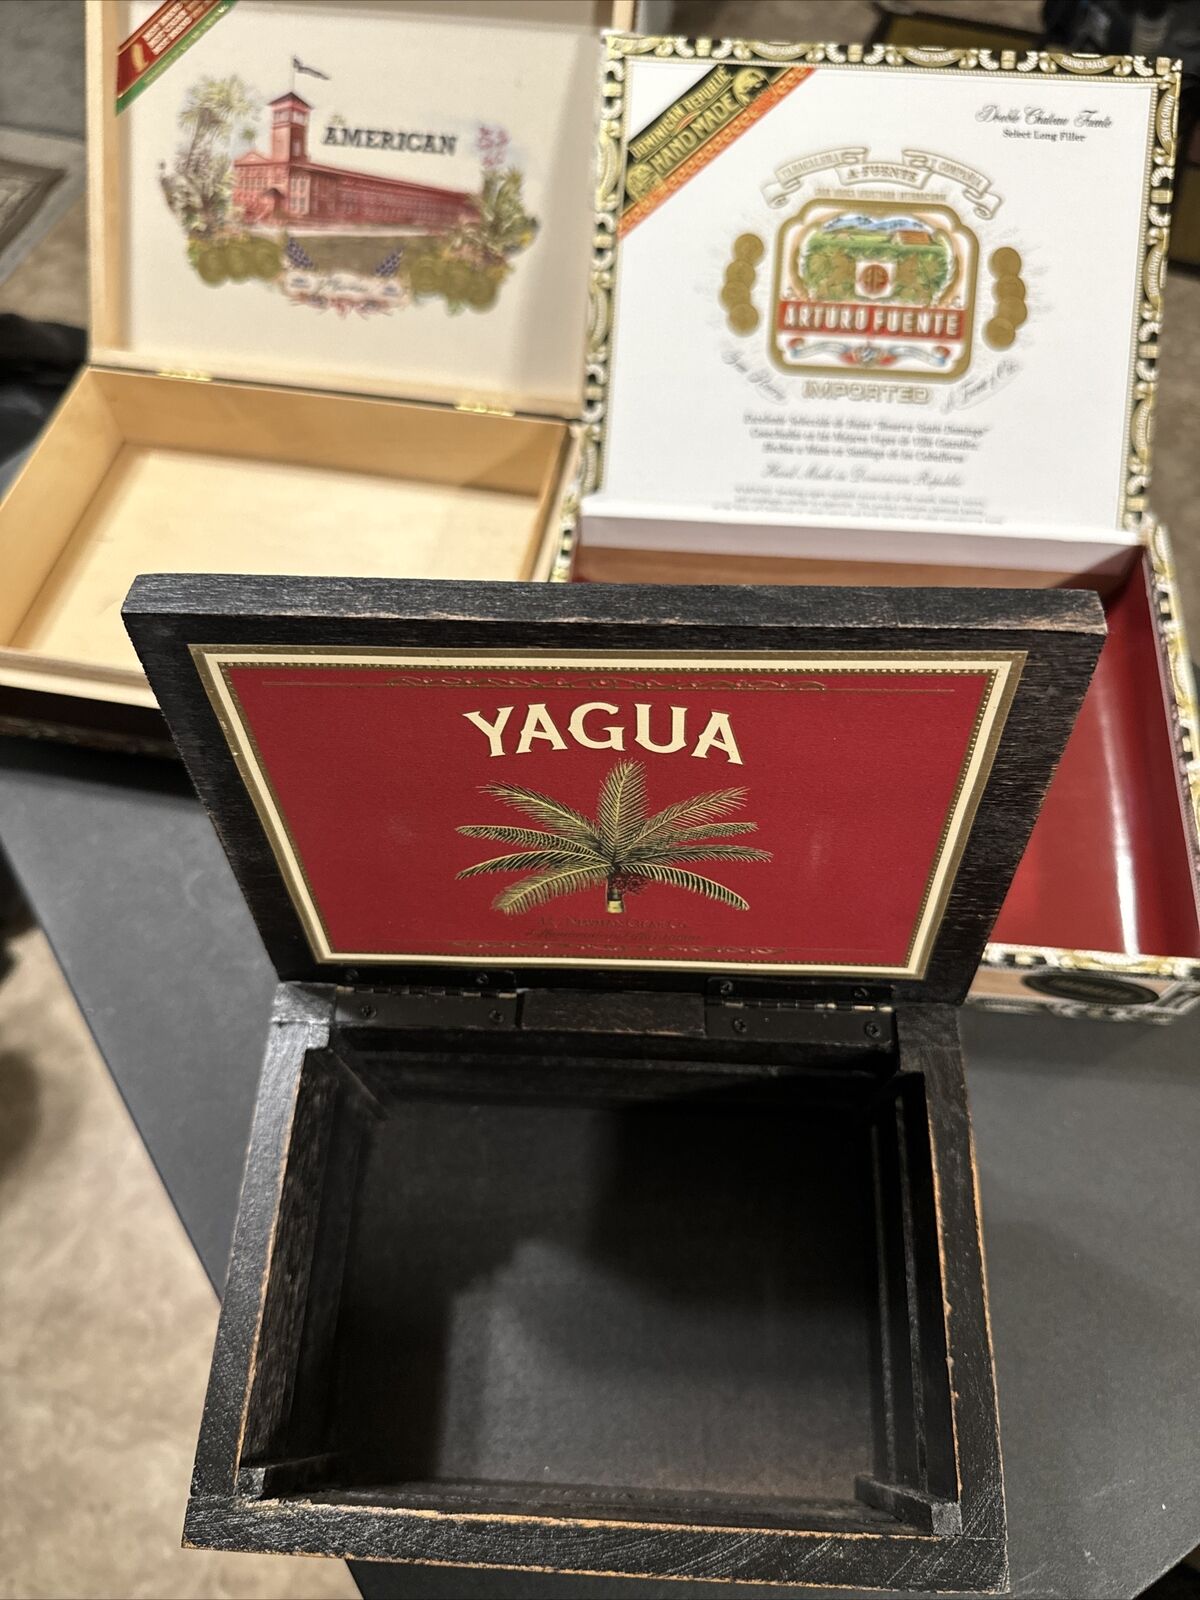 Lot of 3 Premium Cigar Boxes Arturo, The American, Yagua, Beautiful Wooden New